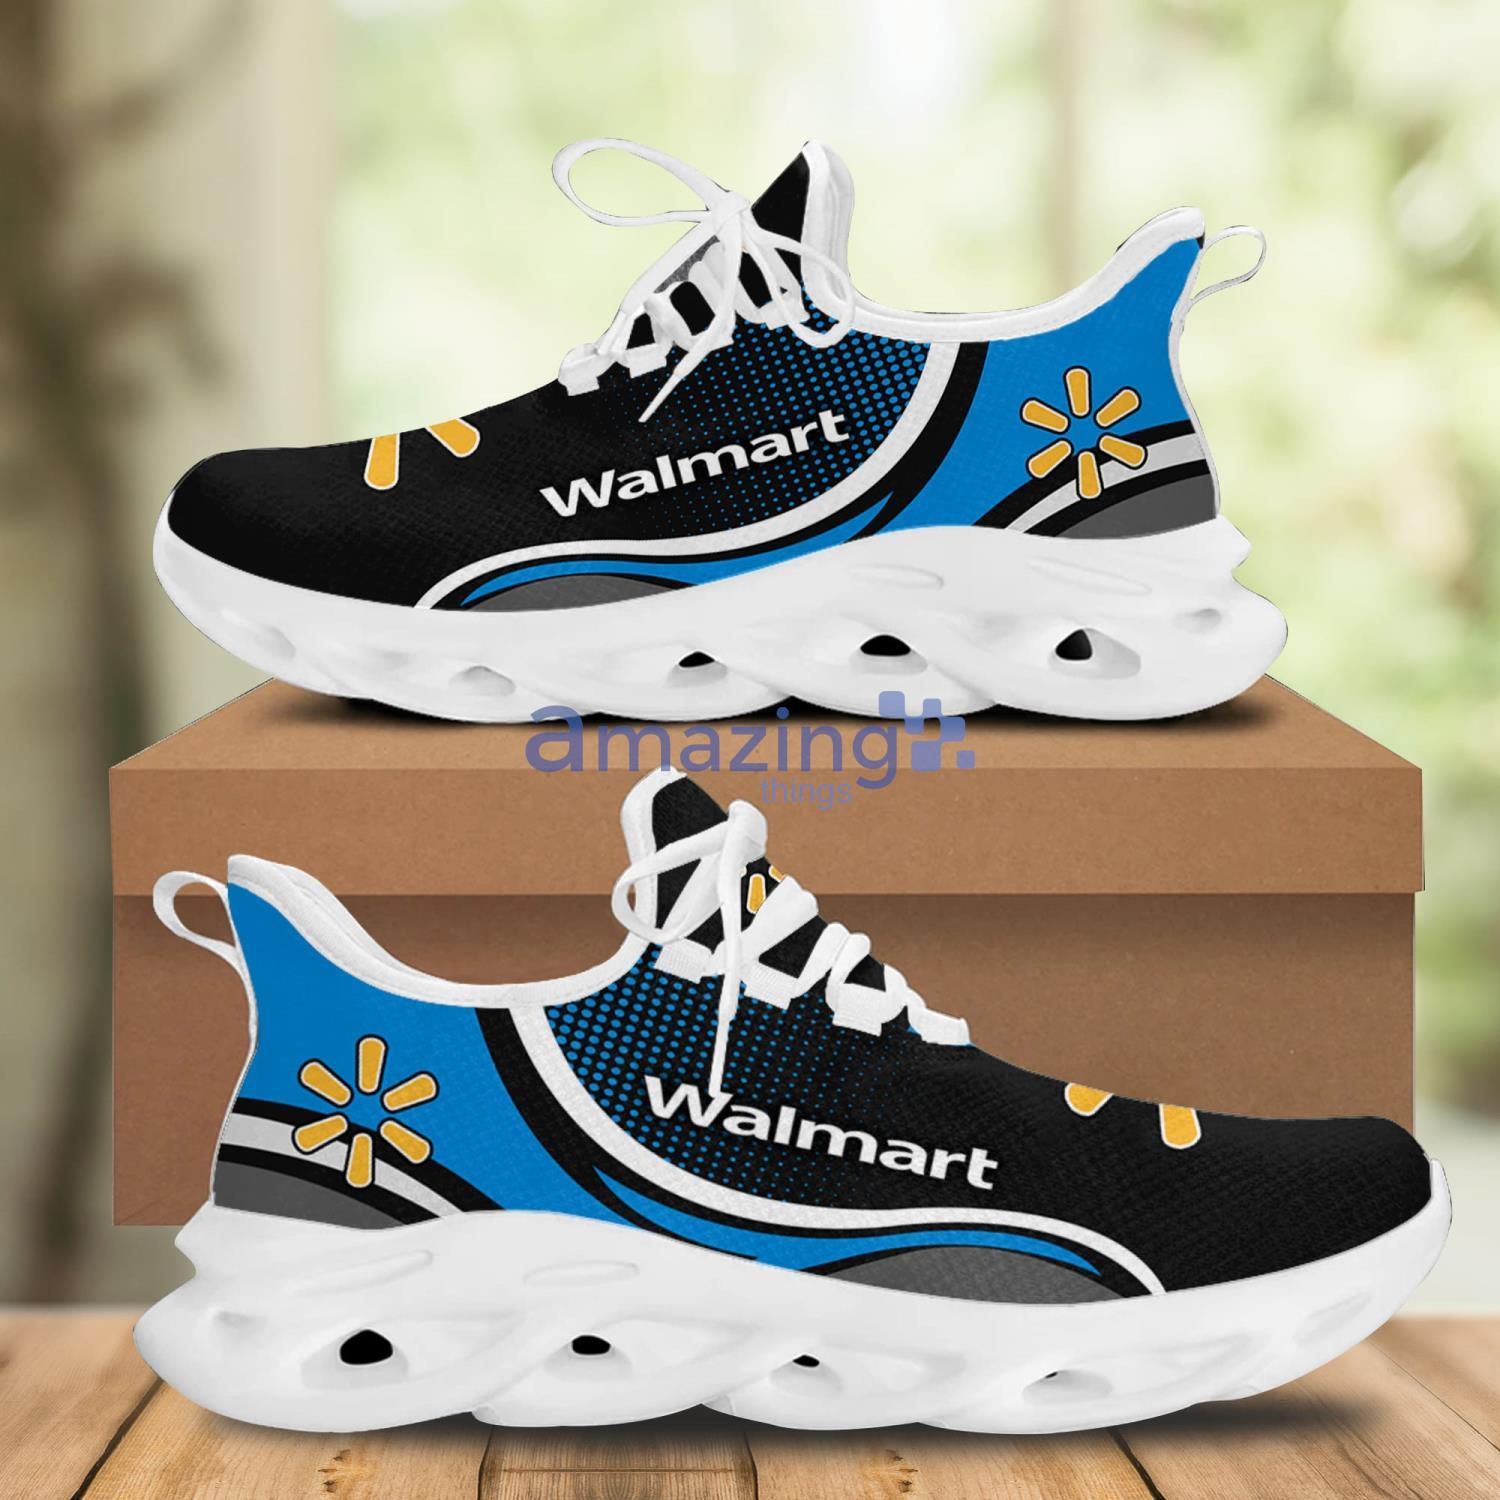 Walmart Men And Women Black Max Soul Shoes Running Sneakers